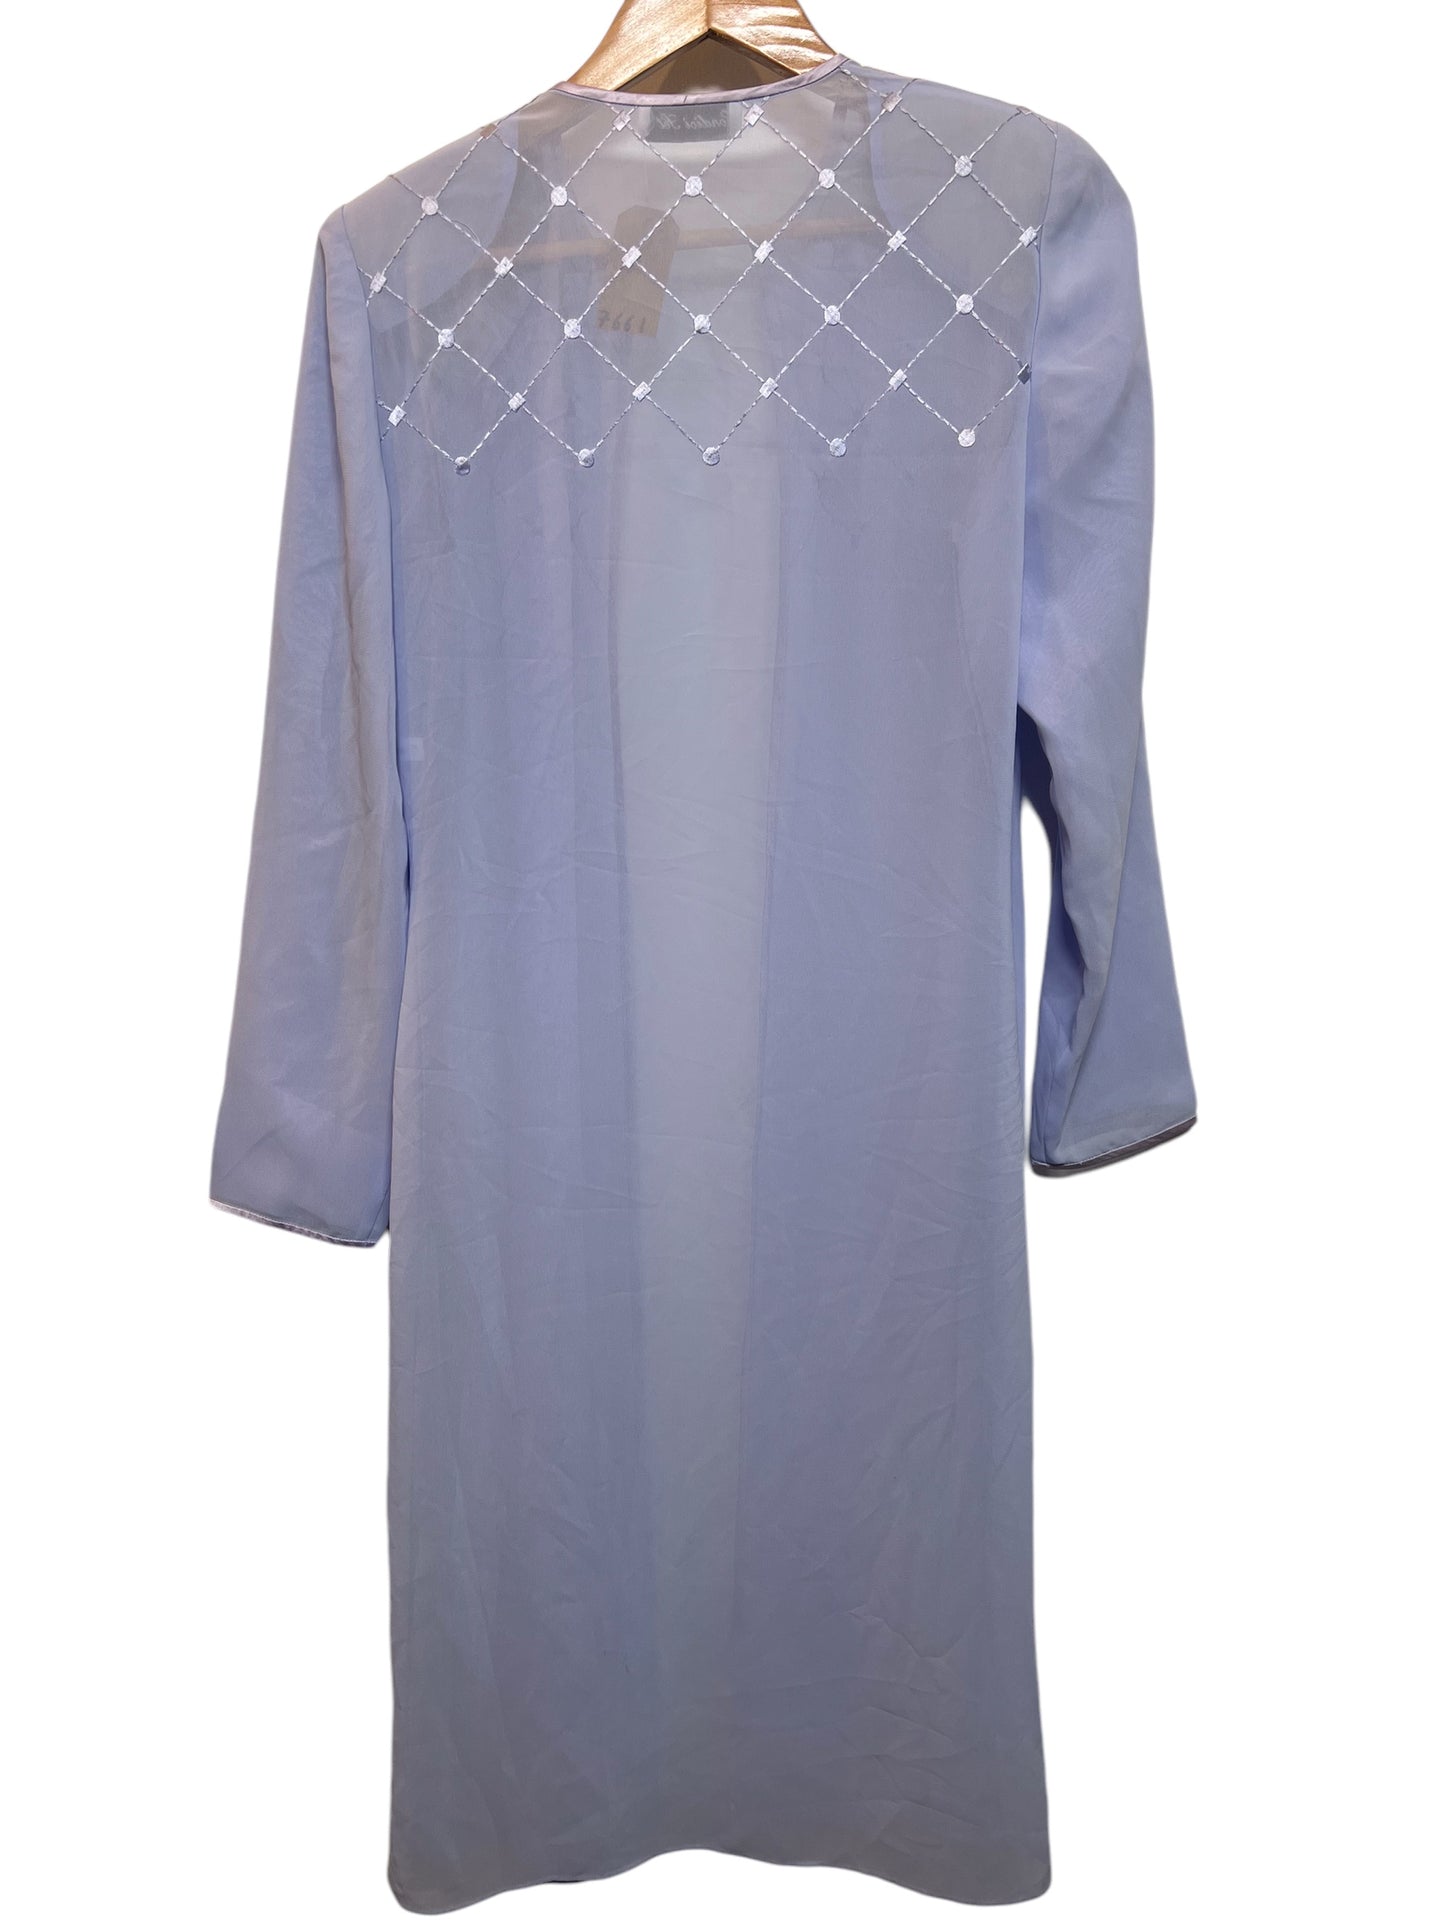 Women’s Blue Beach Gown (Size L)